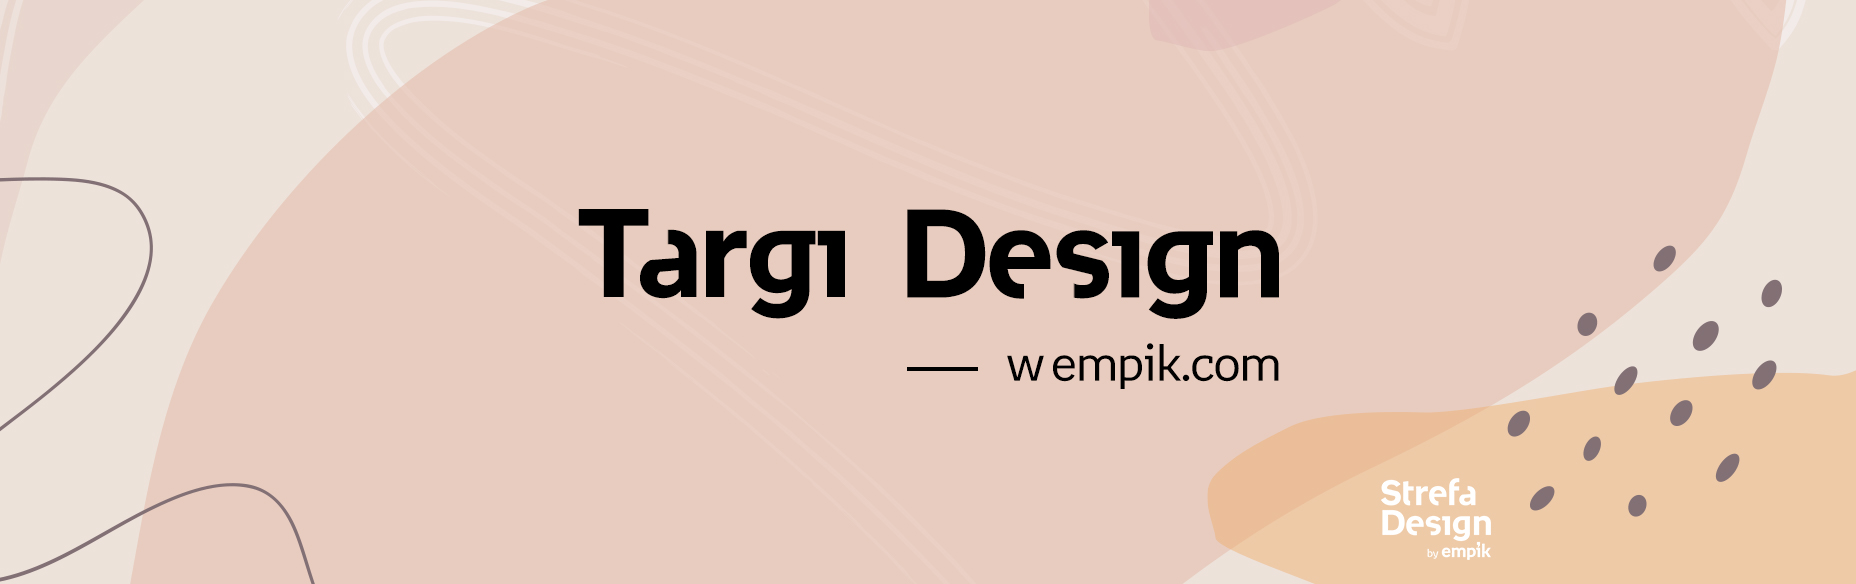 Targi Designu Strefa Desing by Empik